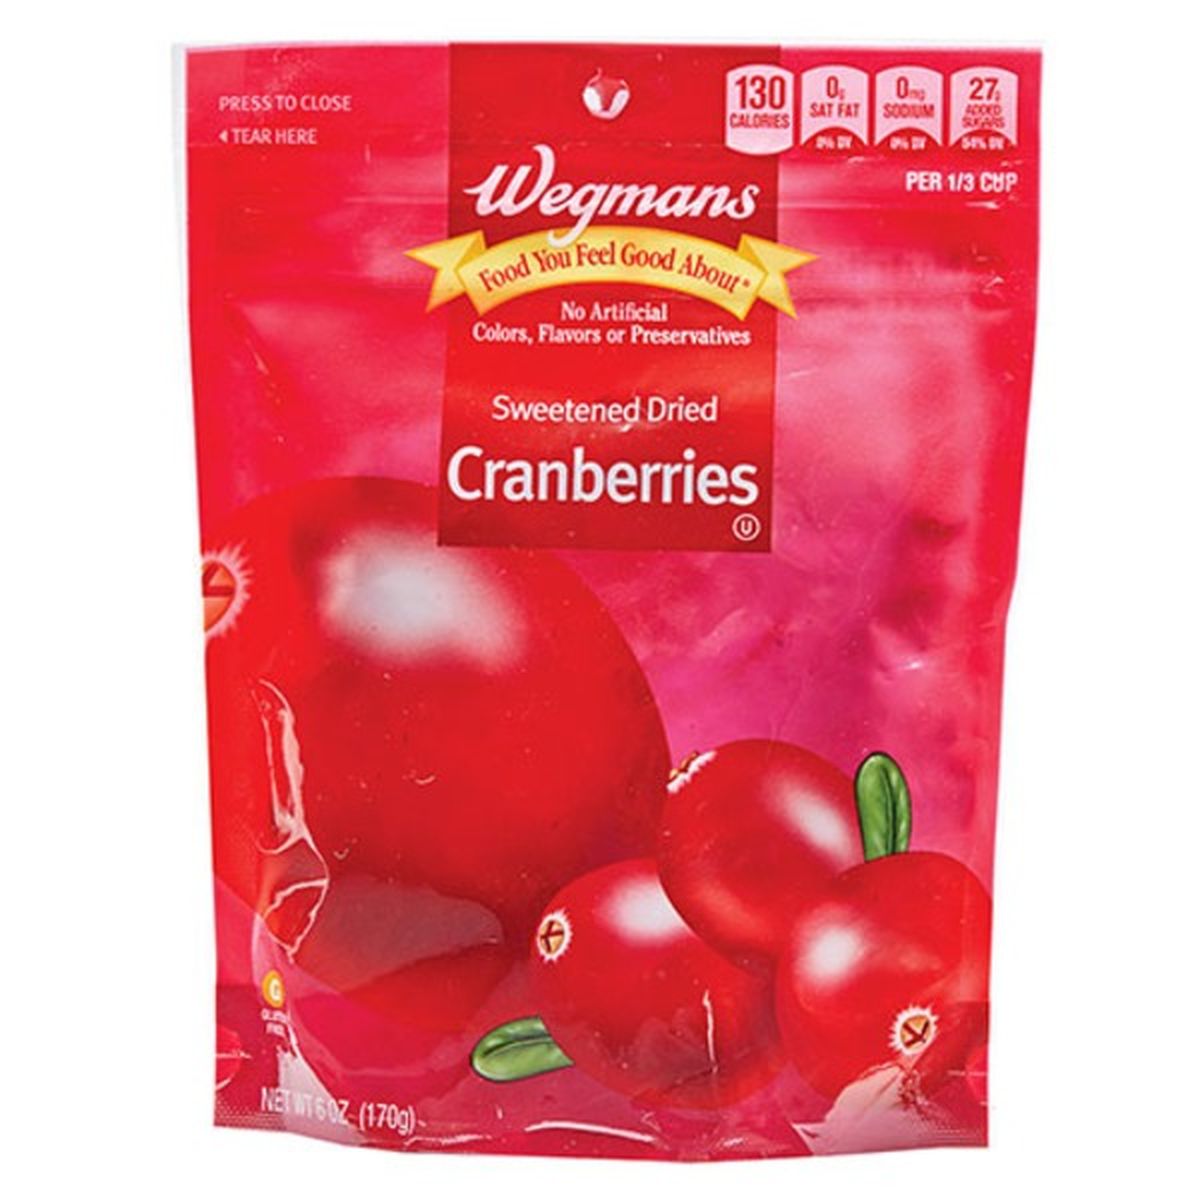 Calories in Wegmans Sweetened Dried Cranberries